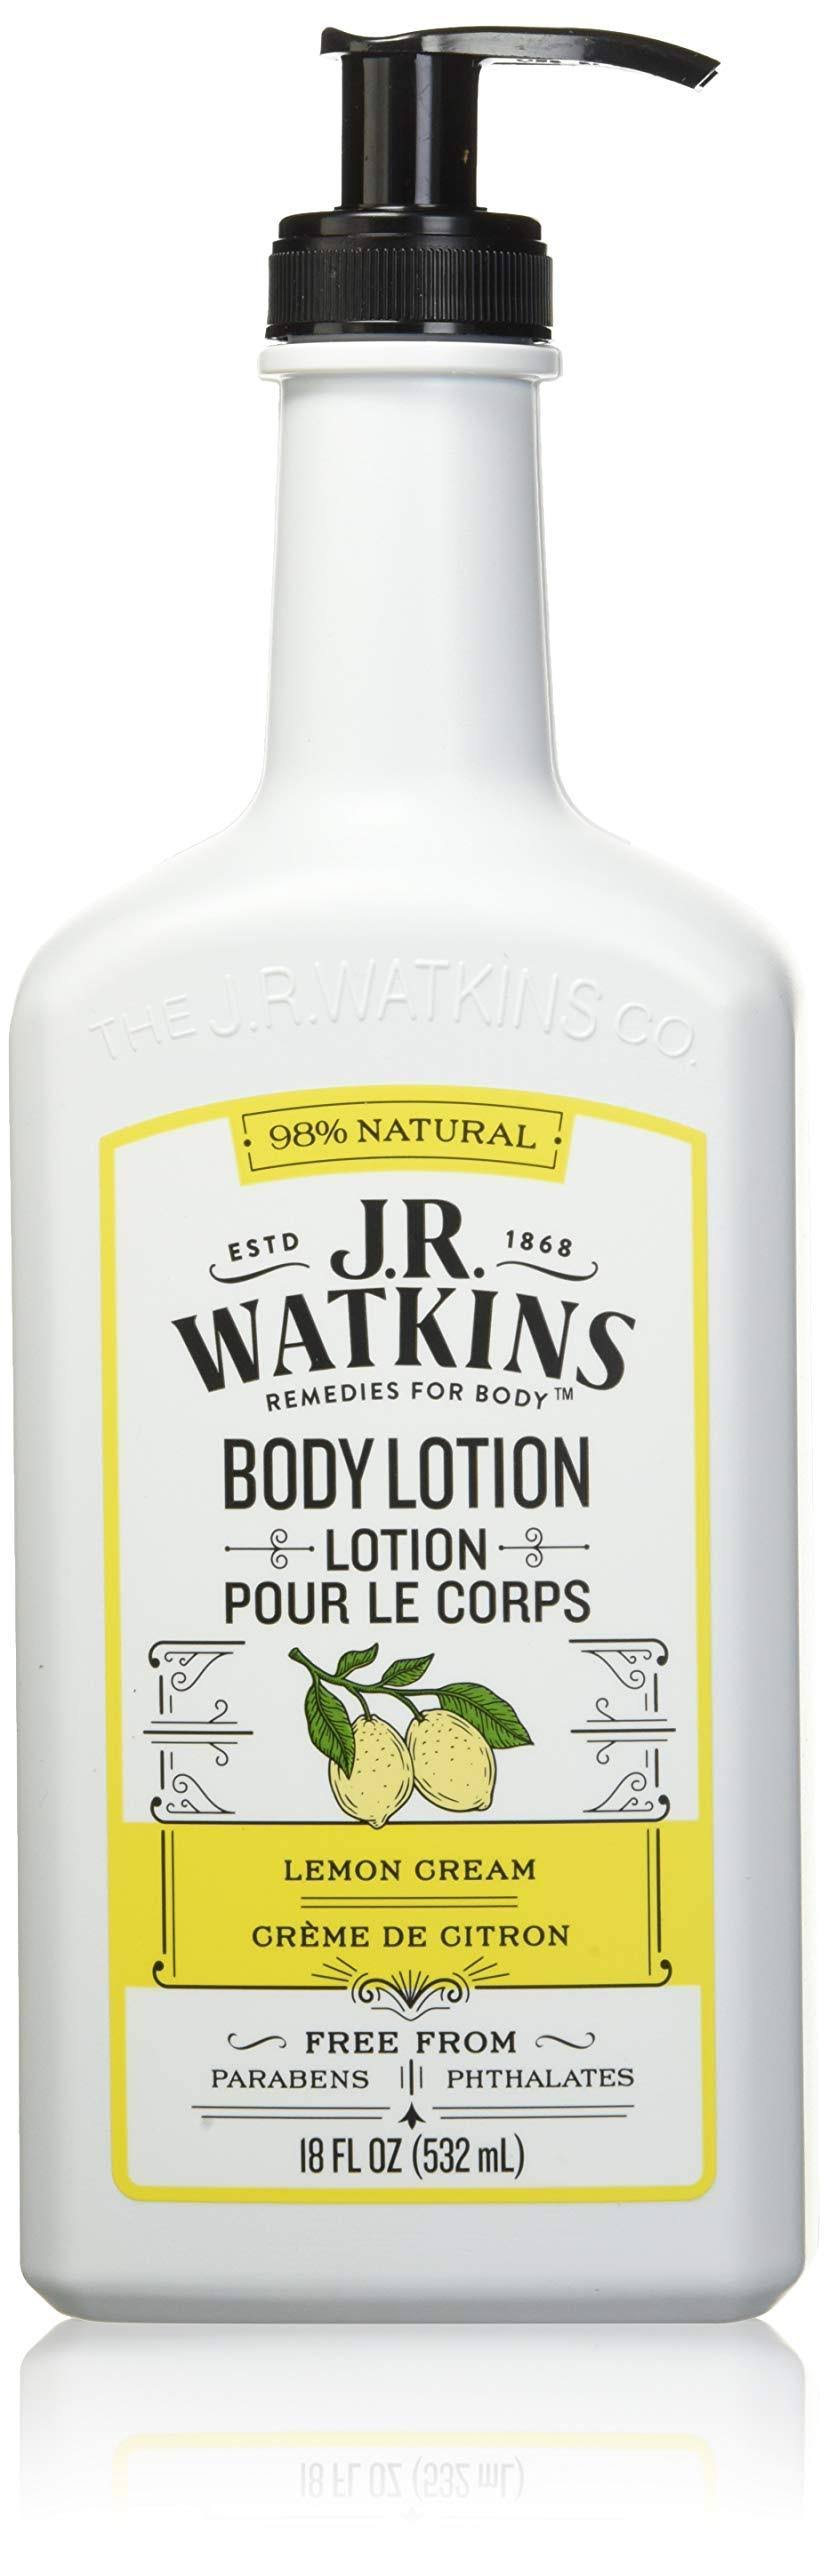 J.R. Watkins Daily Moisturizing Lotion - Lemon Cream, 18oz